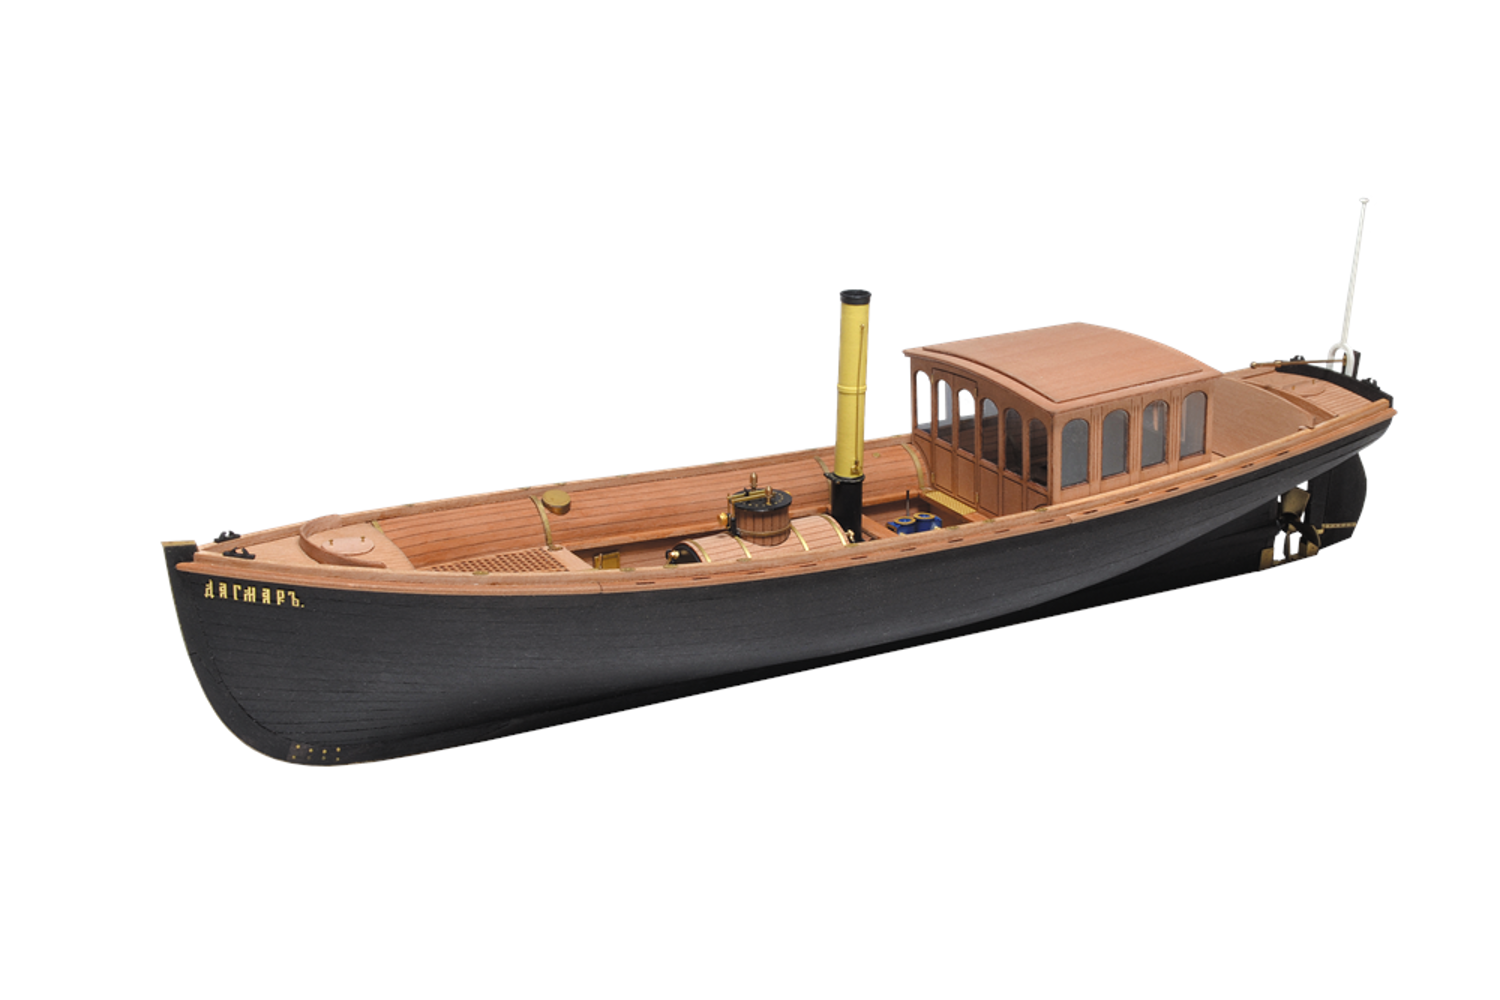 Imperial steamboat "Dagmar" 1:48